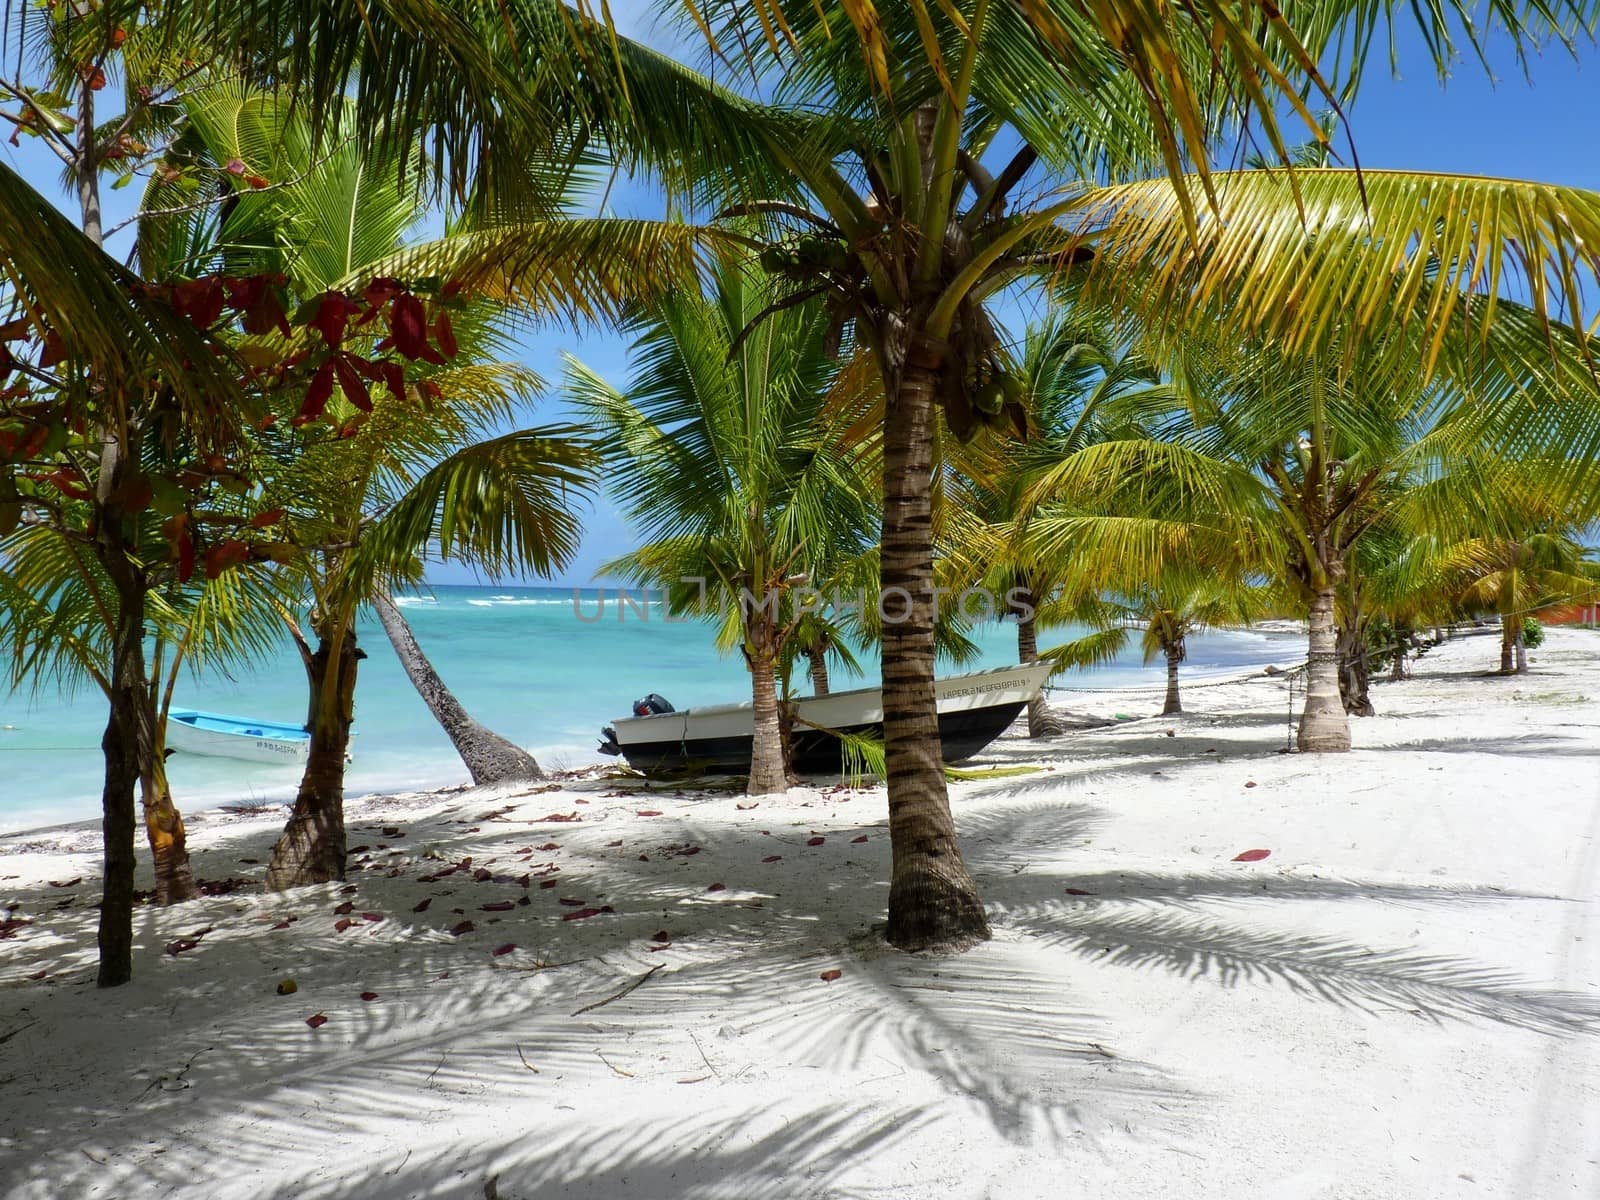 Beach of Mano Juan, Isla Saona, Dominican Republic by nicousnake